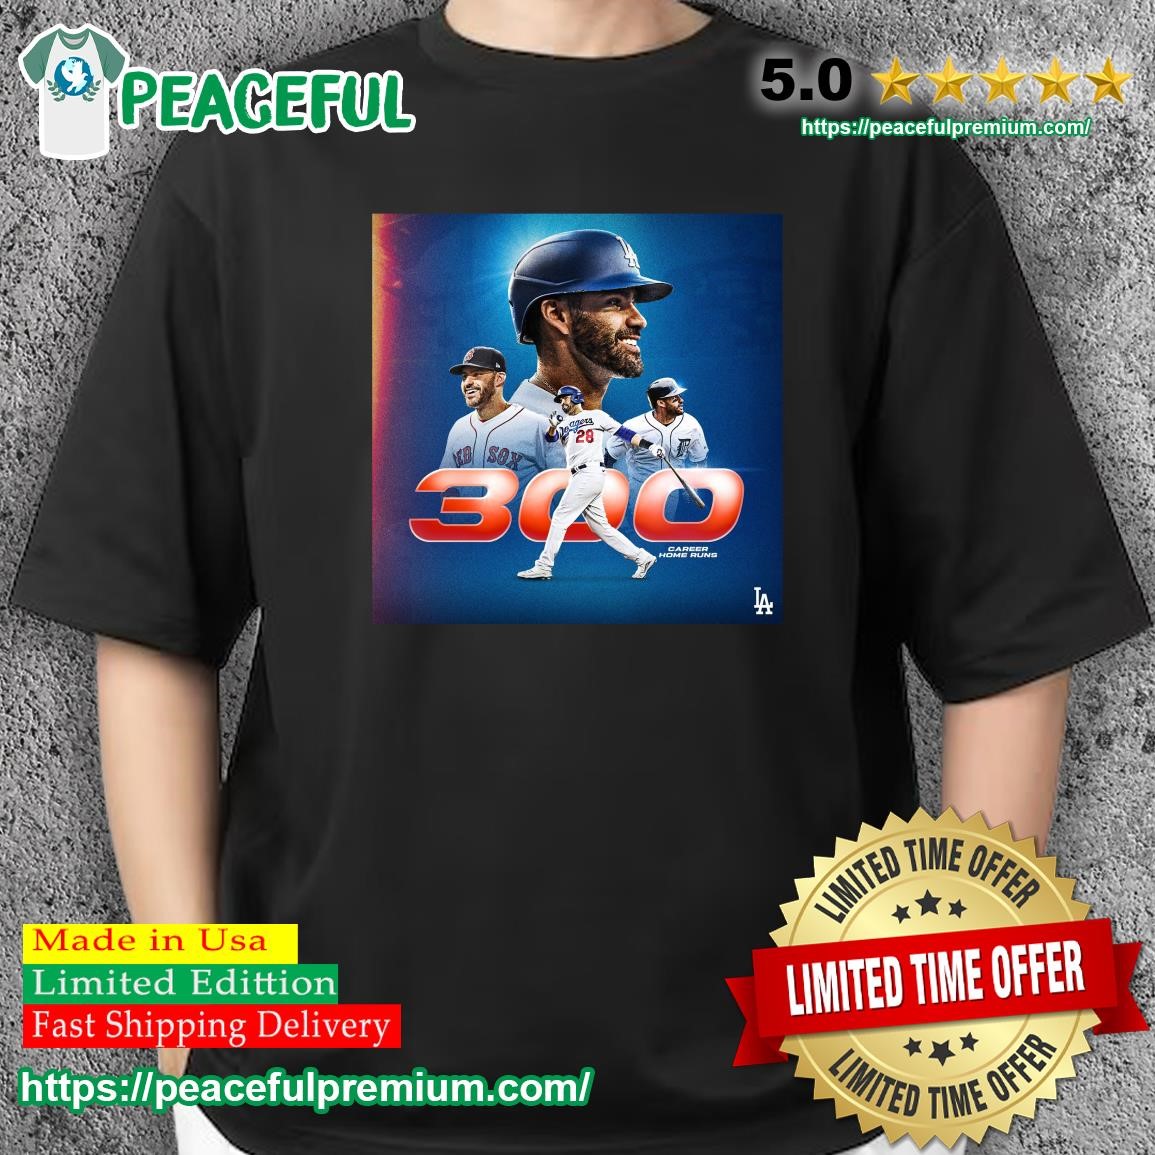 La Dodgers J D Martinez 300 Career Home Runs Shirt - Shibtee Clothing